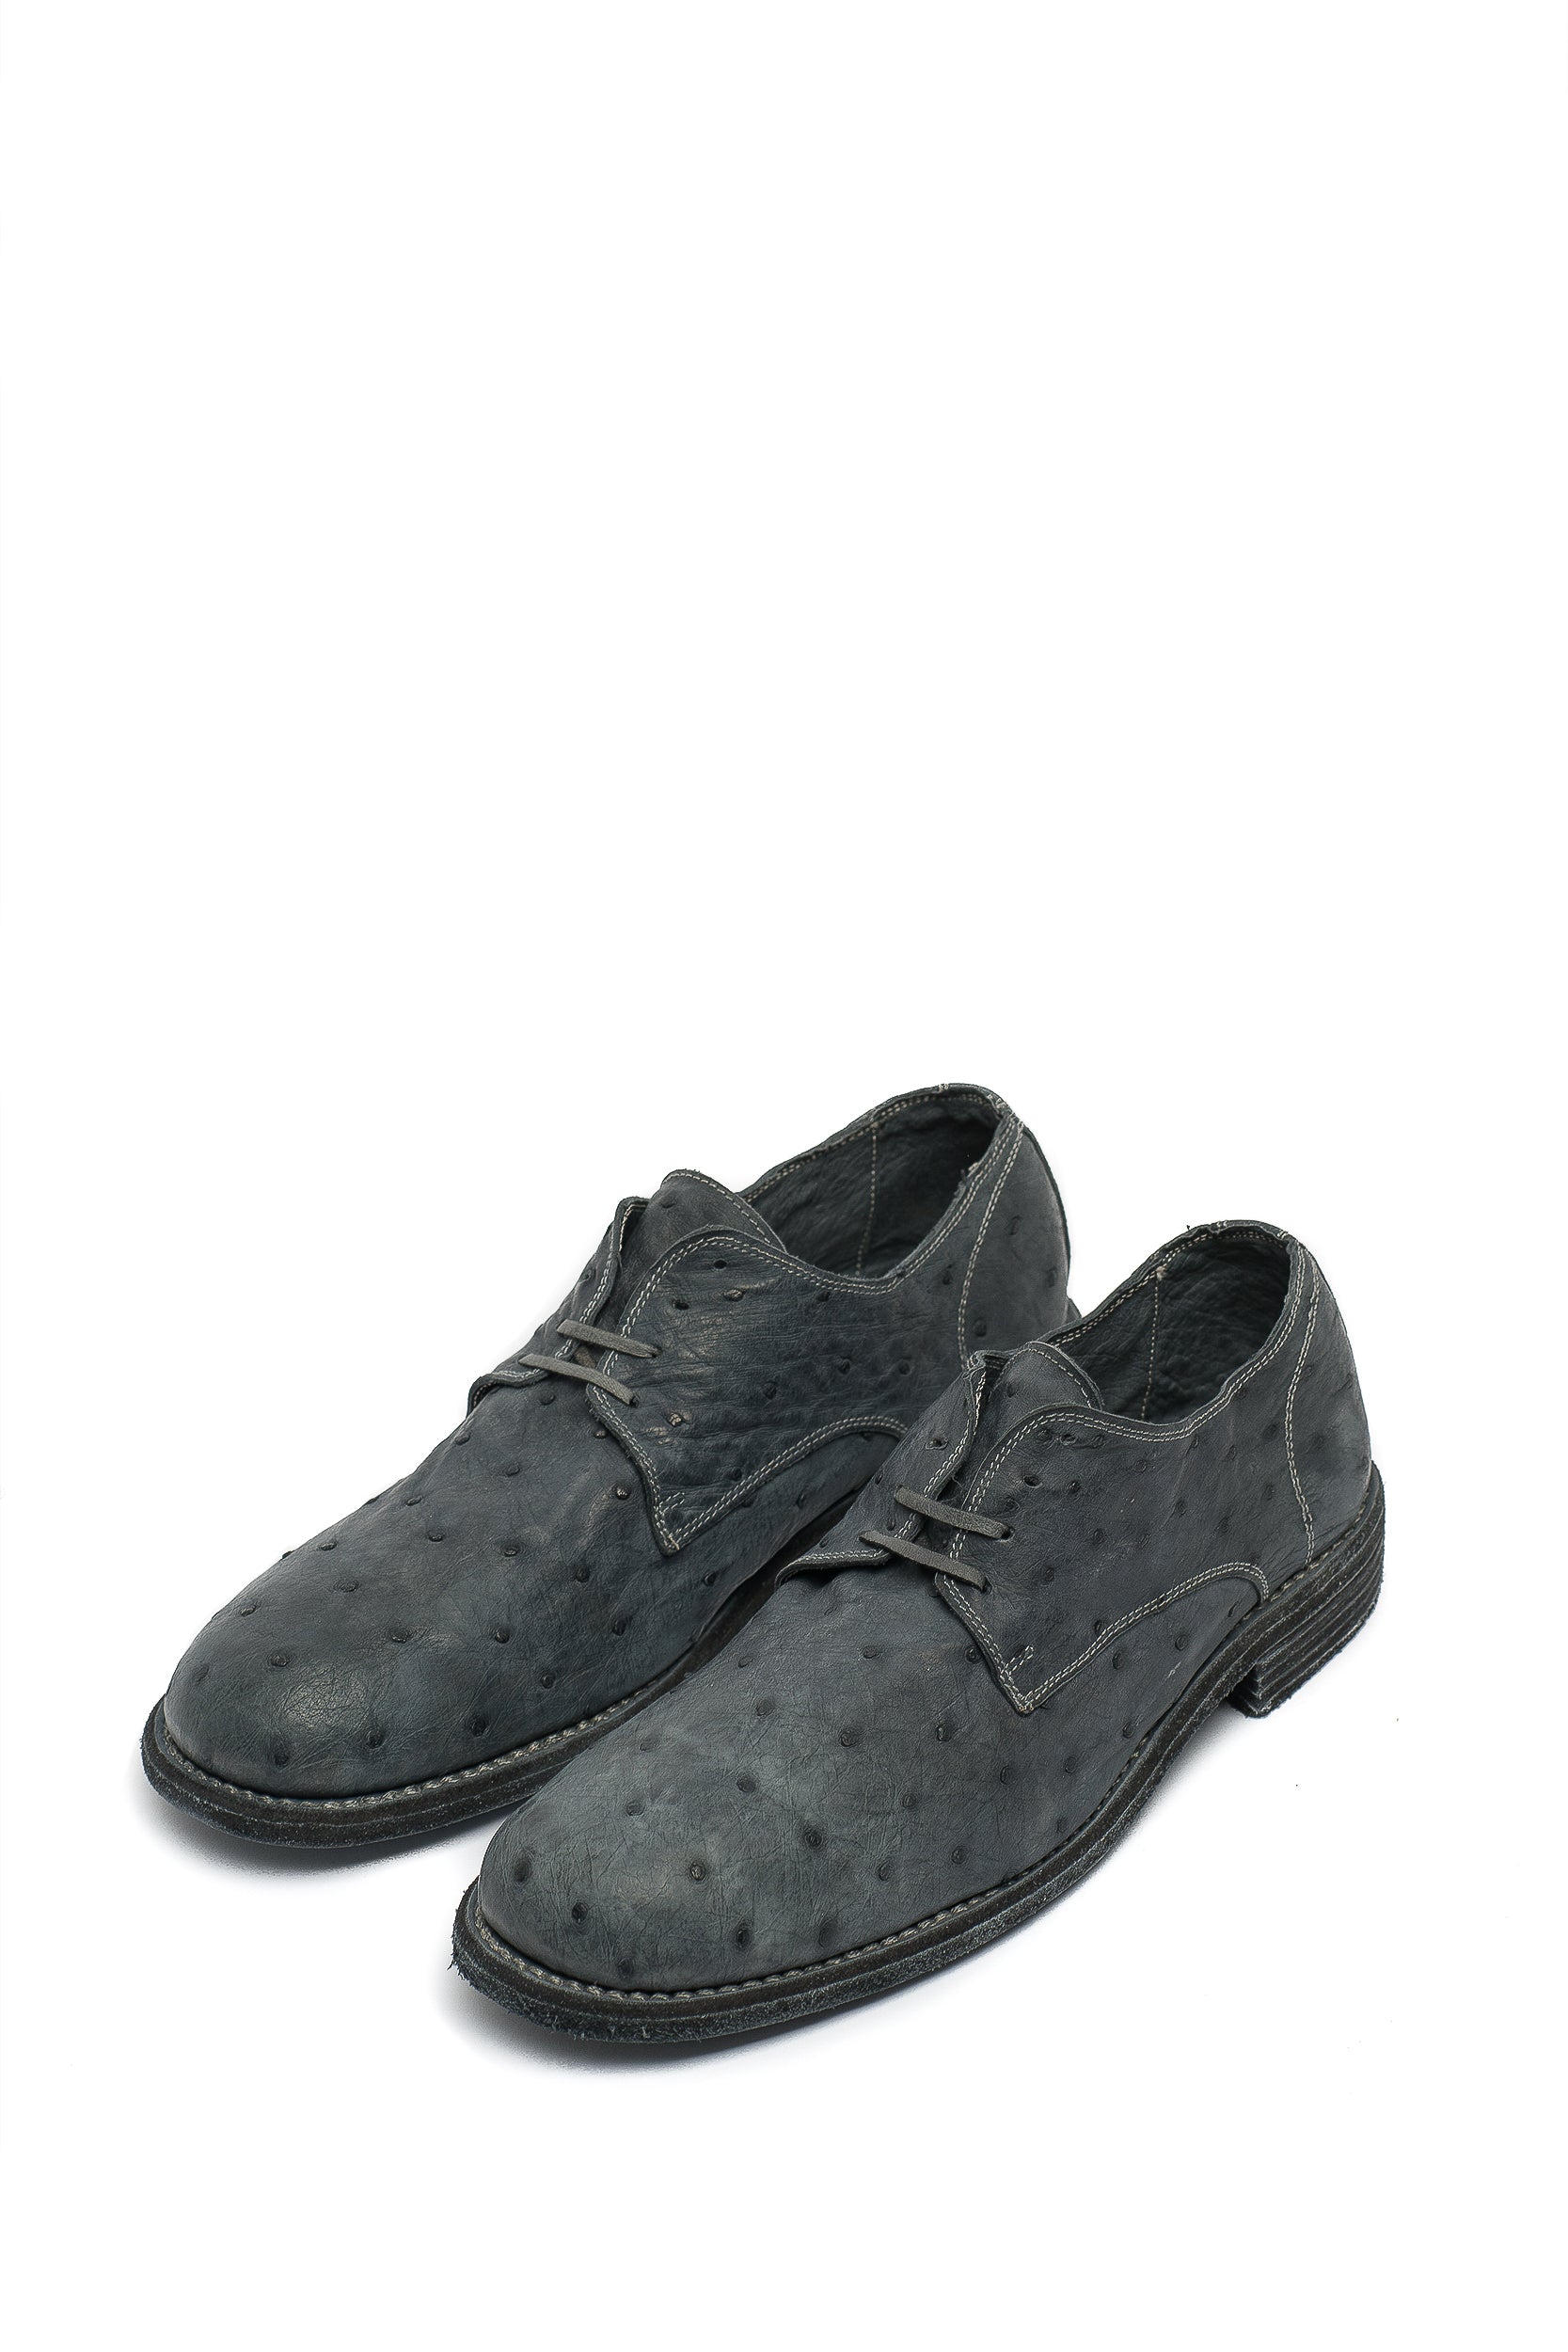 hide-m  GUIDI 992, Classic Derby Shoe black horse leather